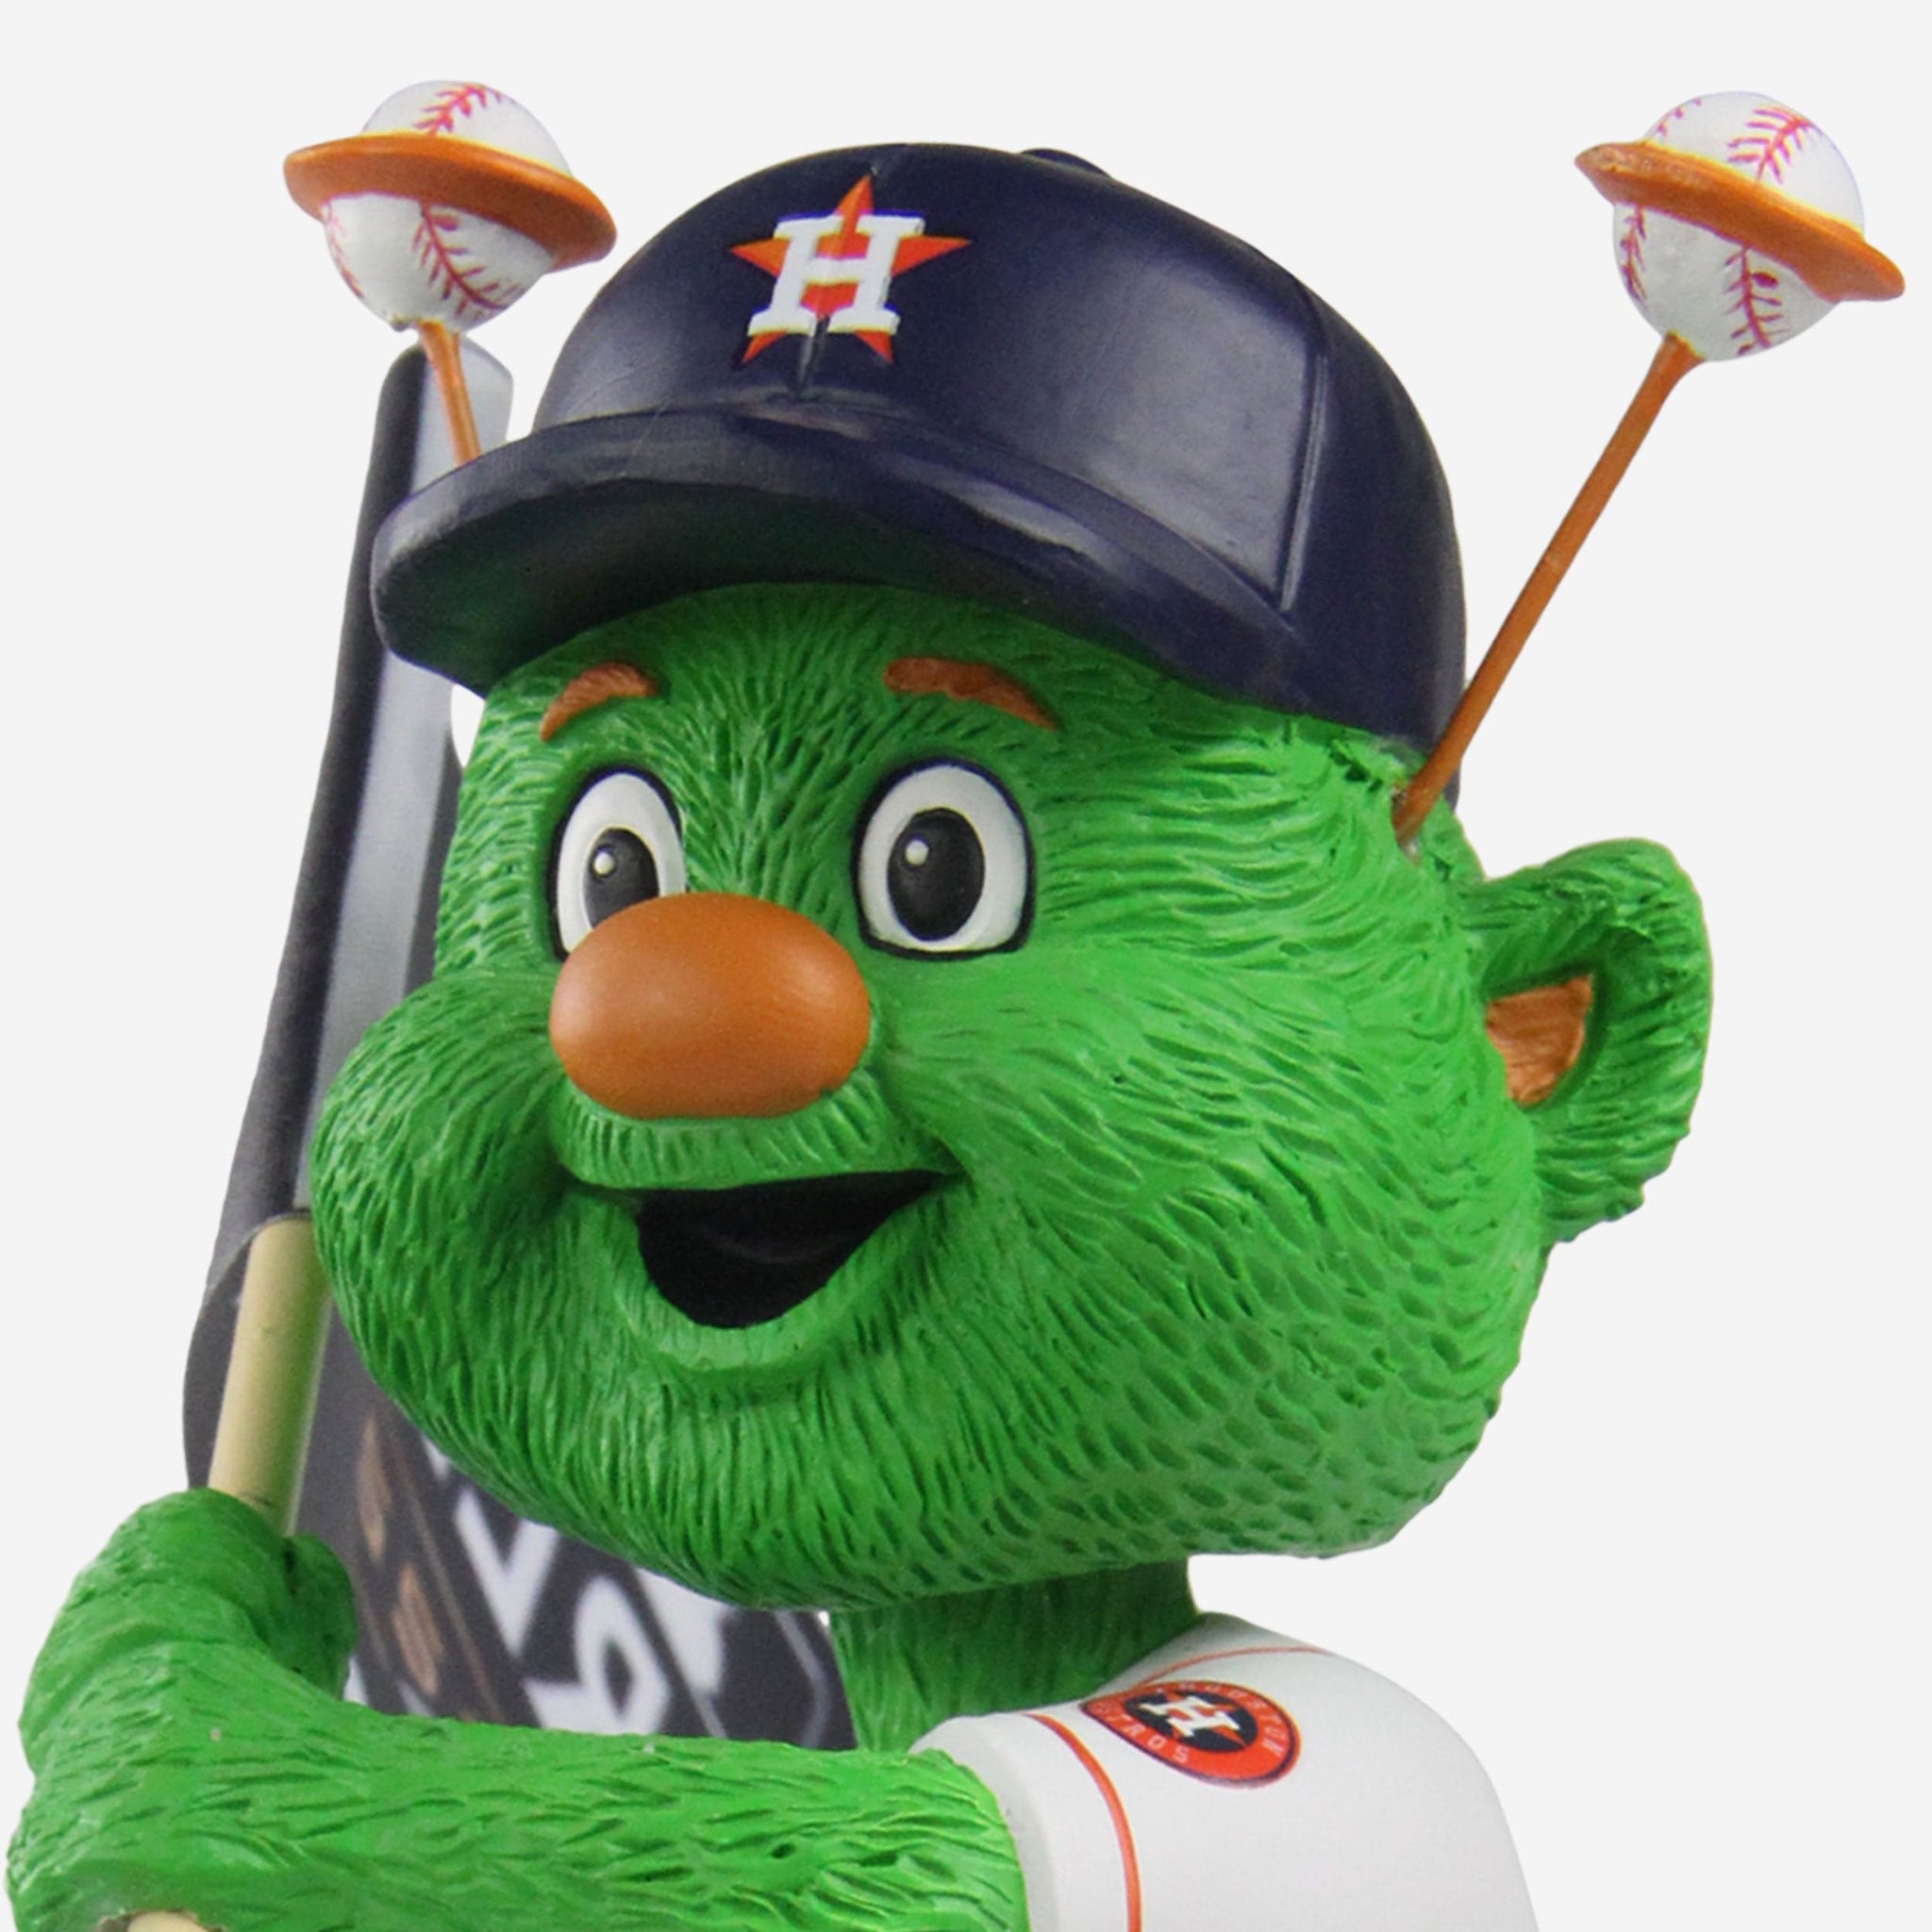 Orbit Houston Astros 2022 American League Champions Mascot Bobblehead FOCO